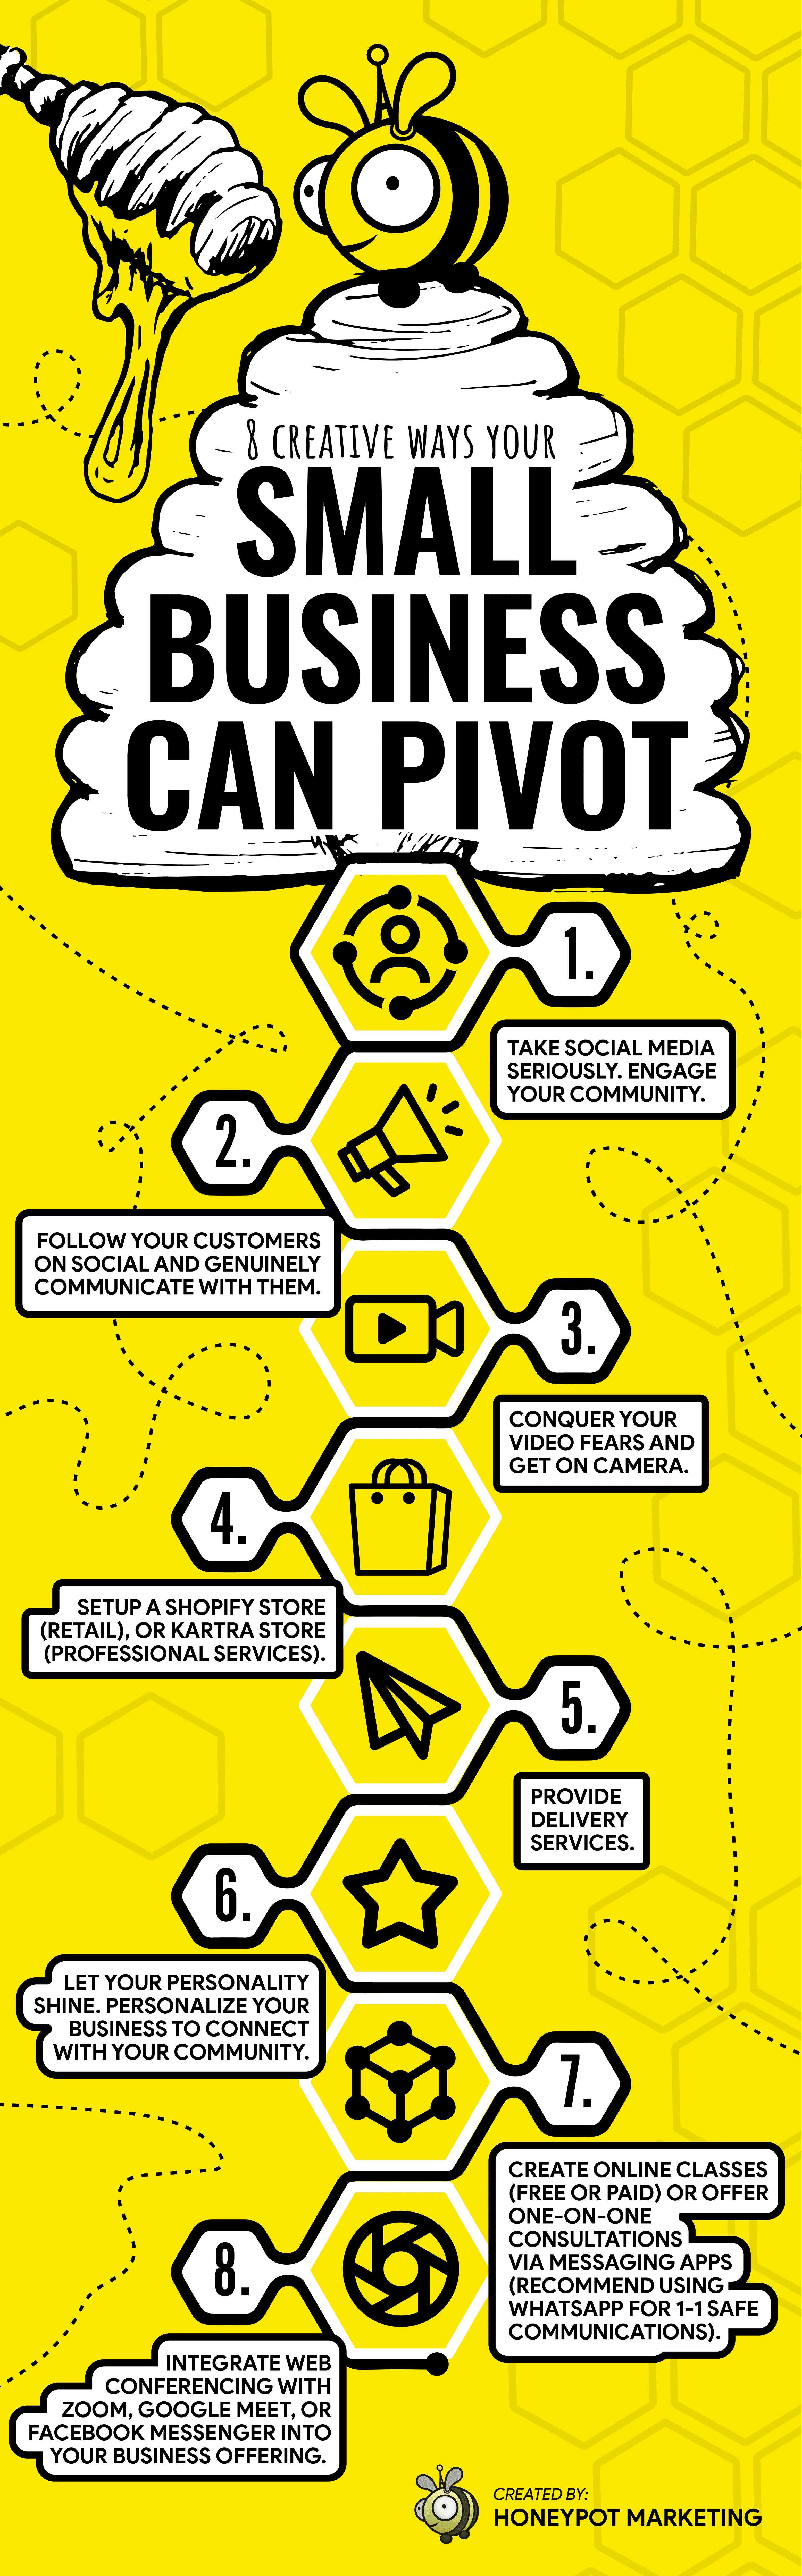 Honeypot infographic creative marketing tactics